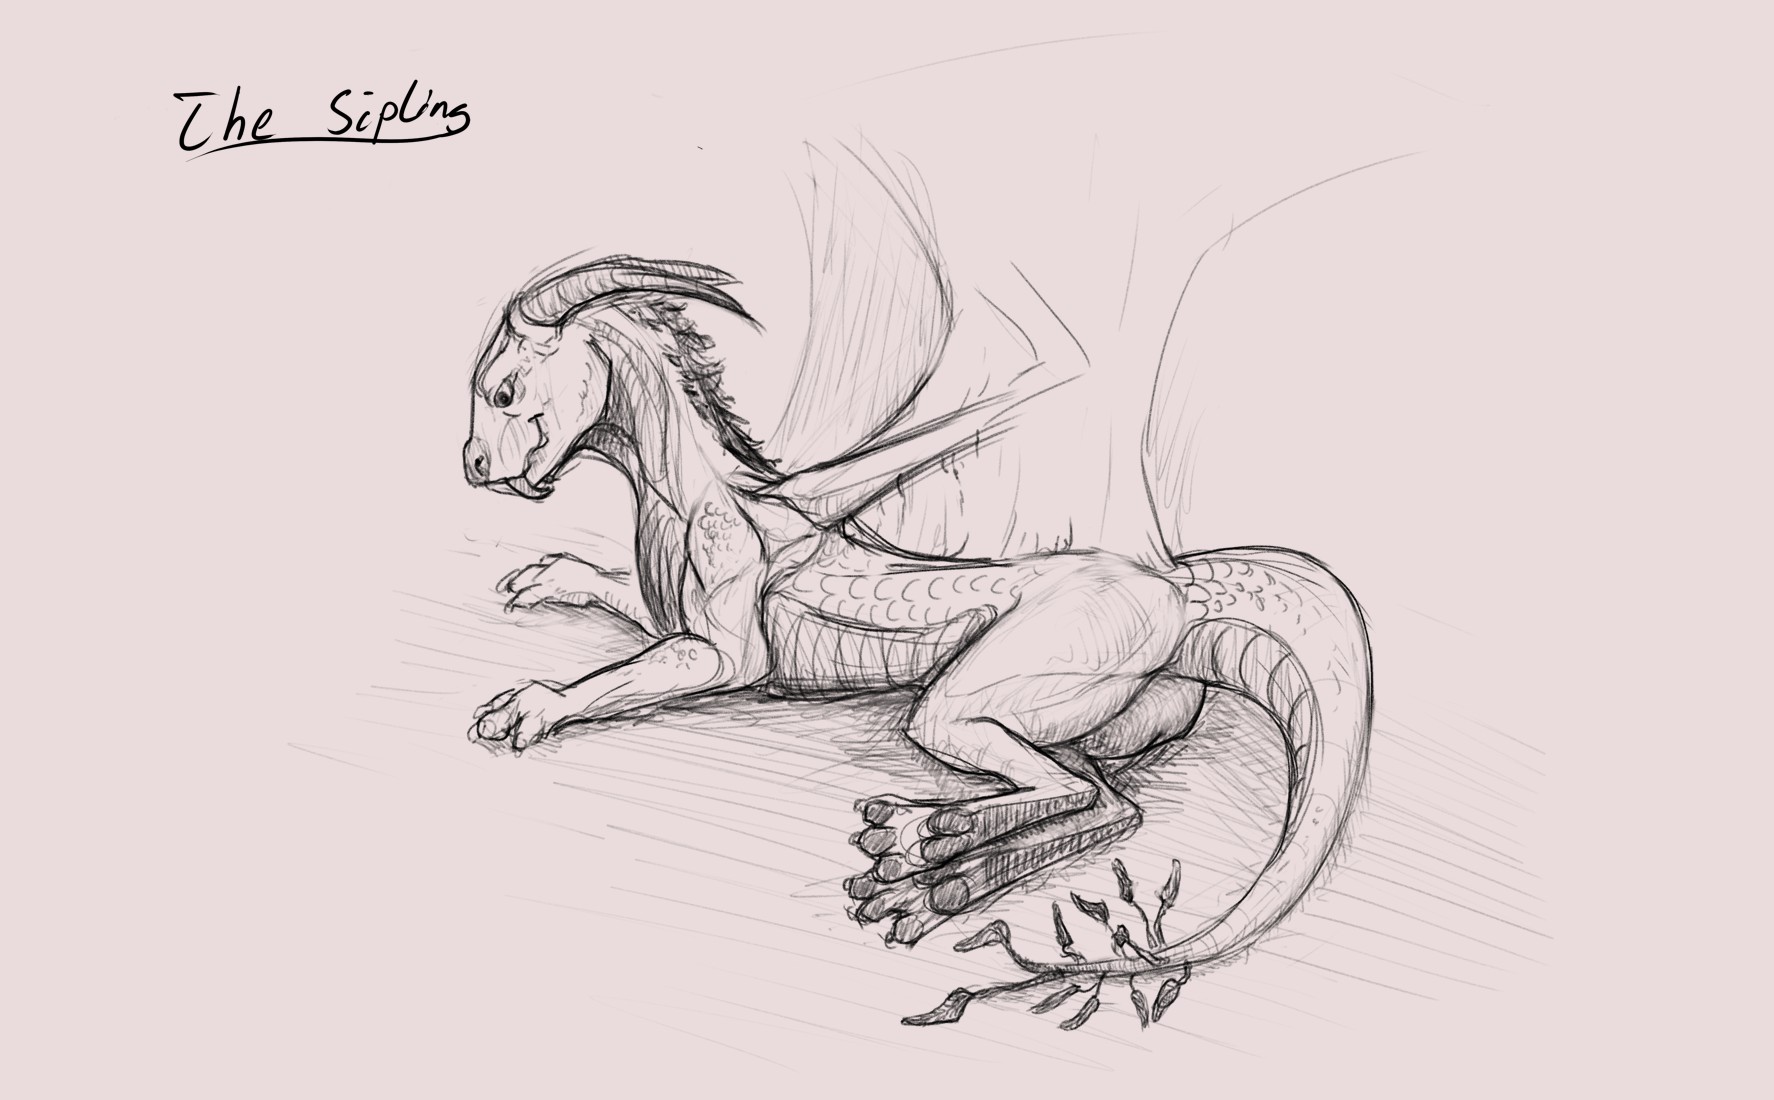 Sketch of a sipling dragon